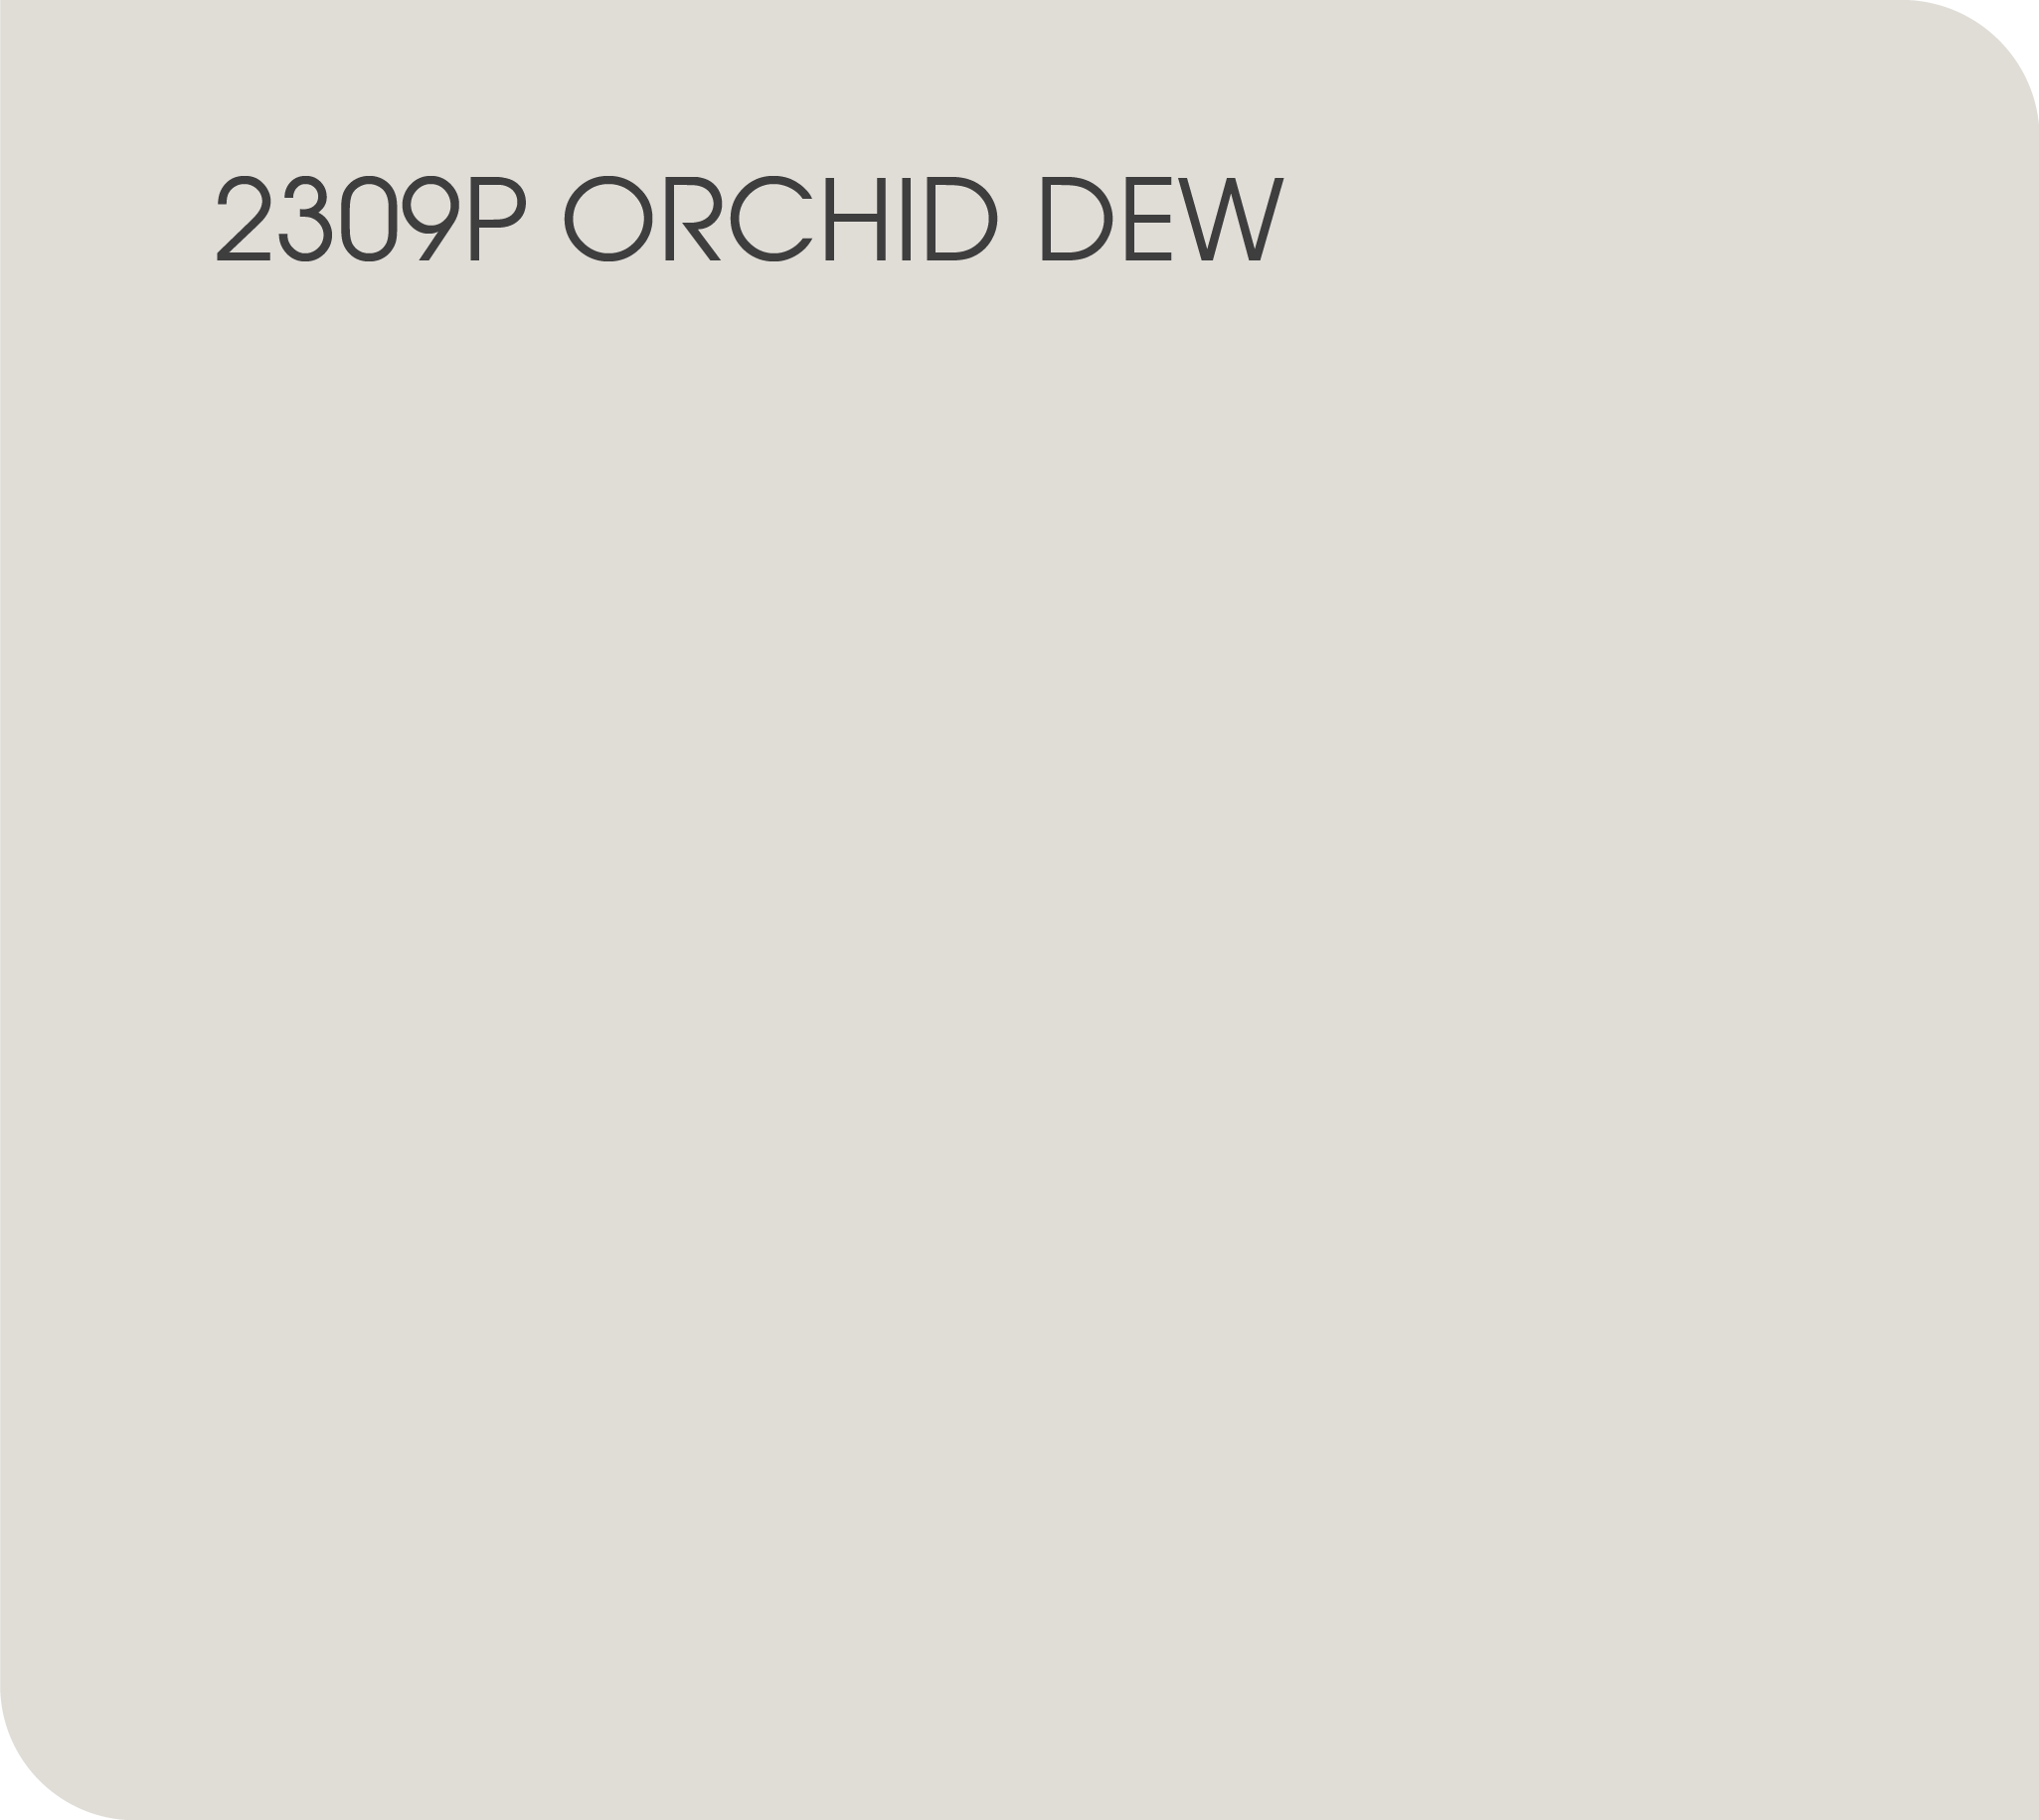 orchid dew 2309P